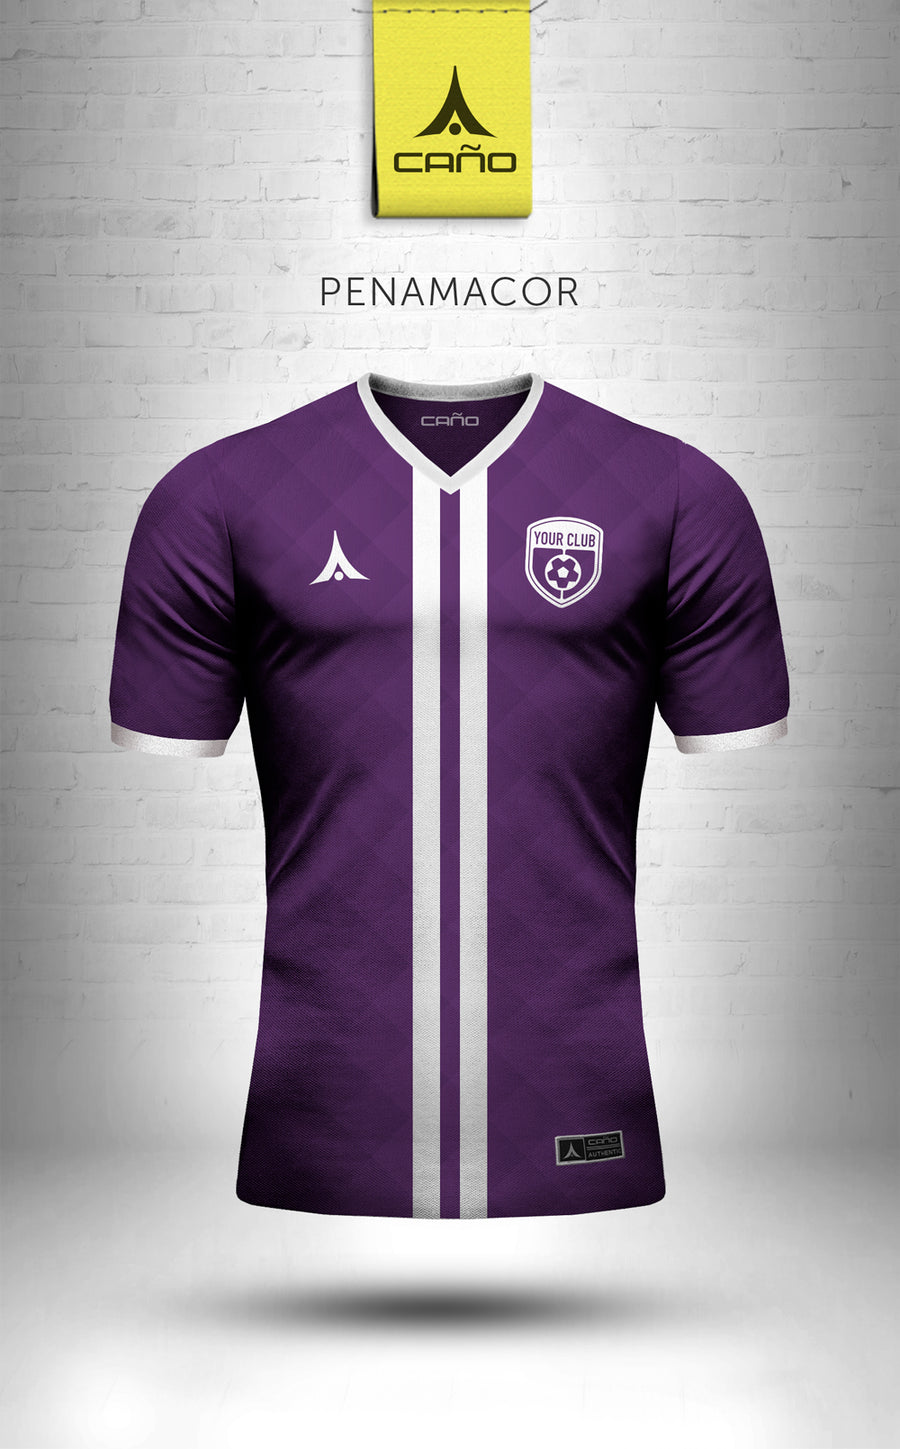 Penamacor in purple/white